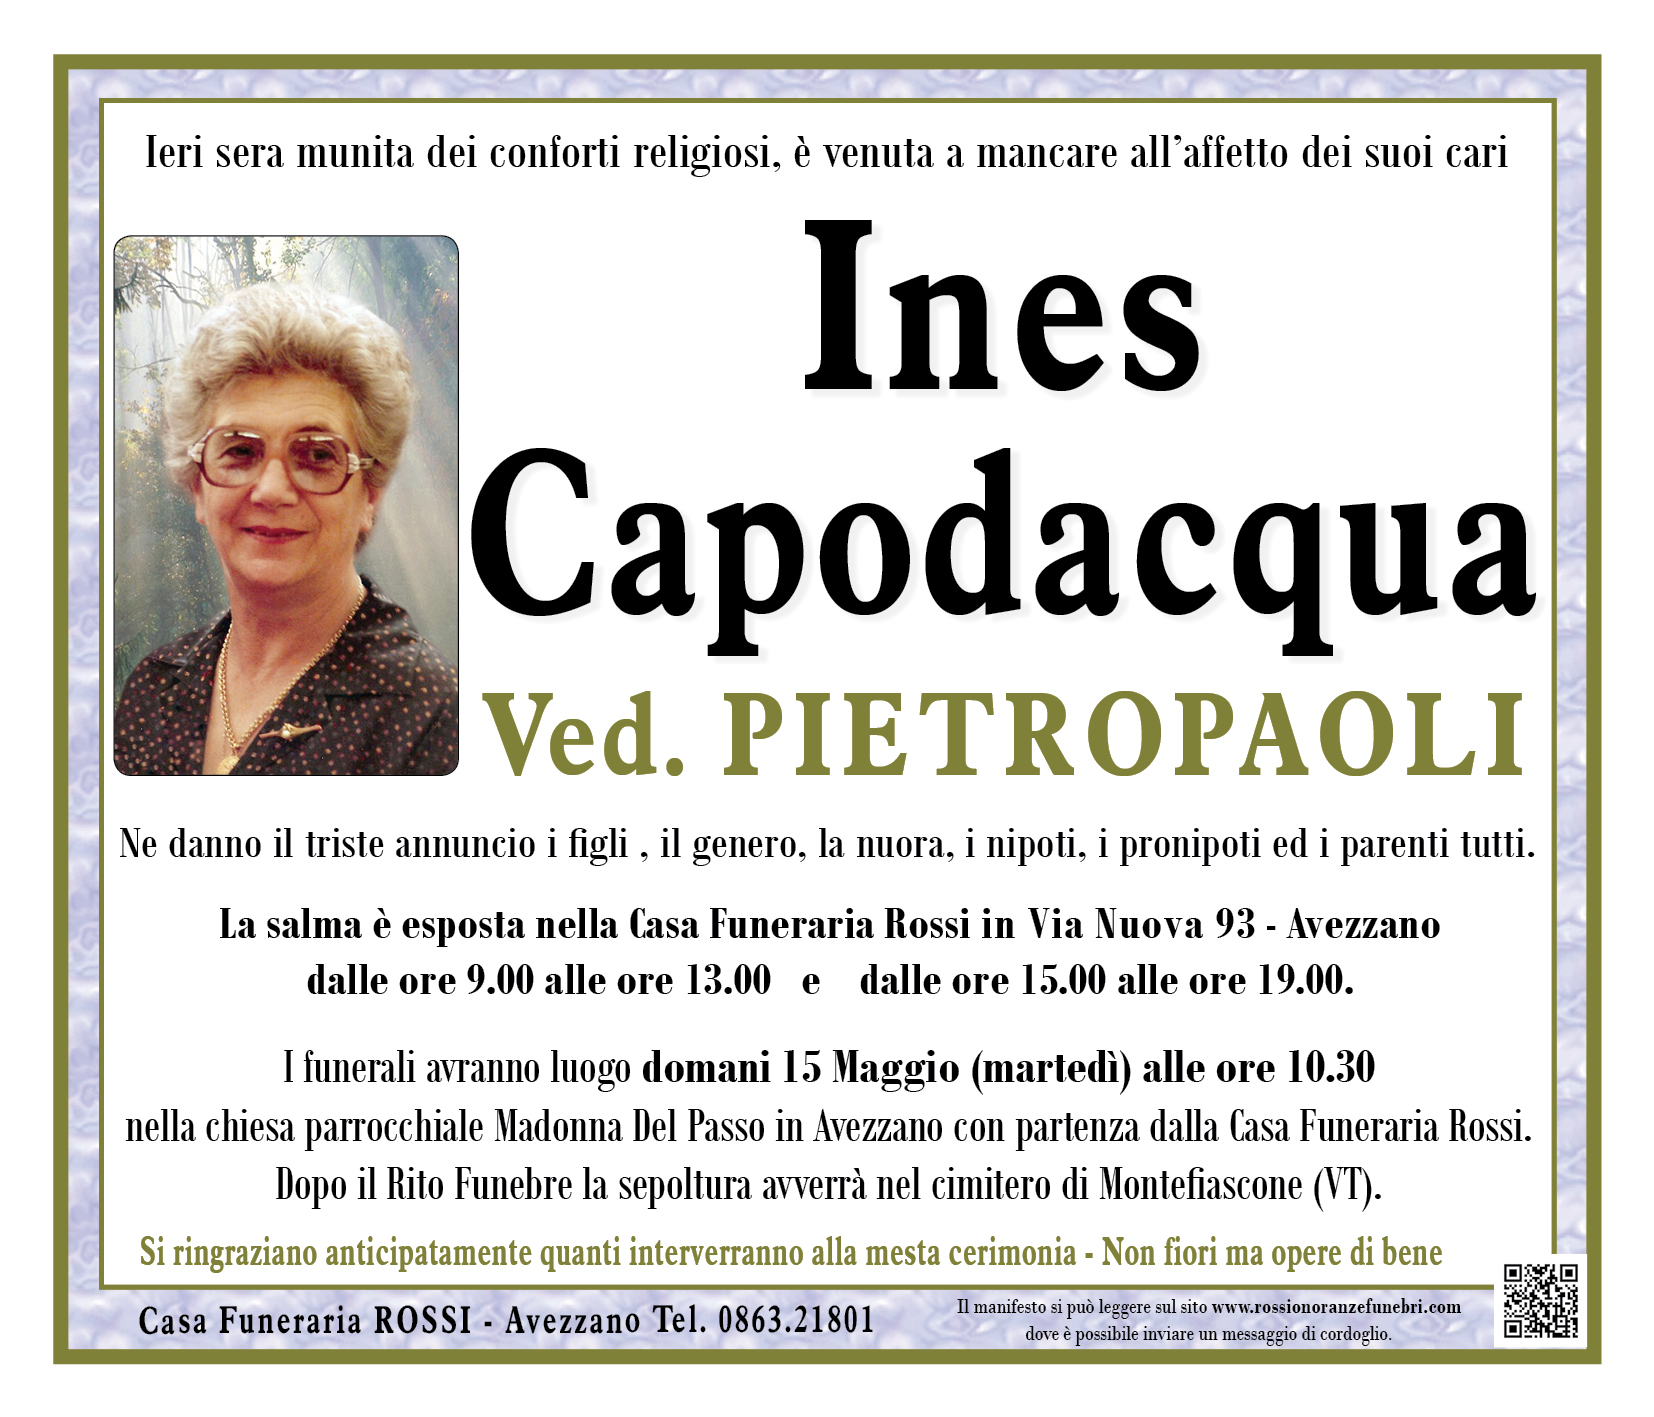 Ines Capodacqua